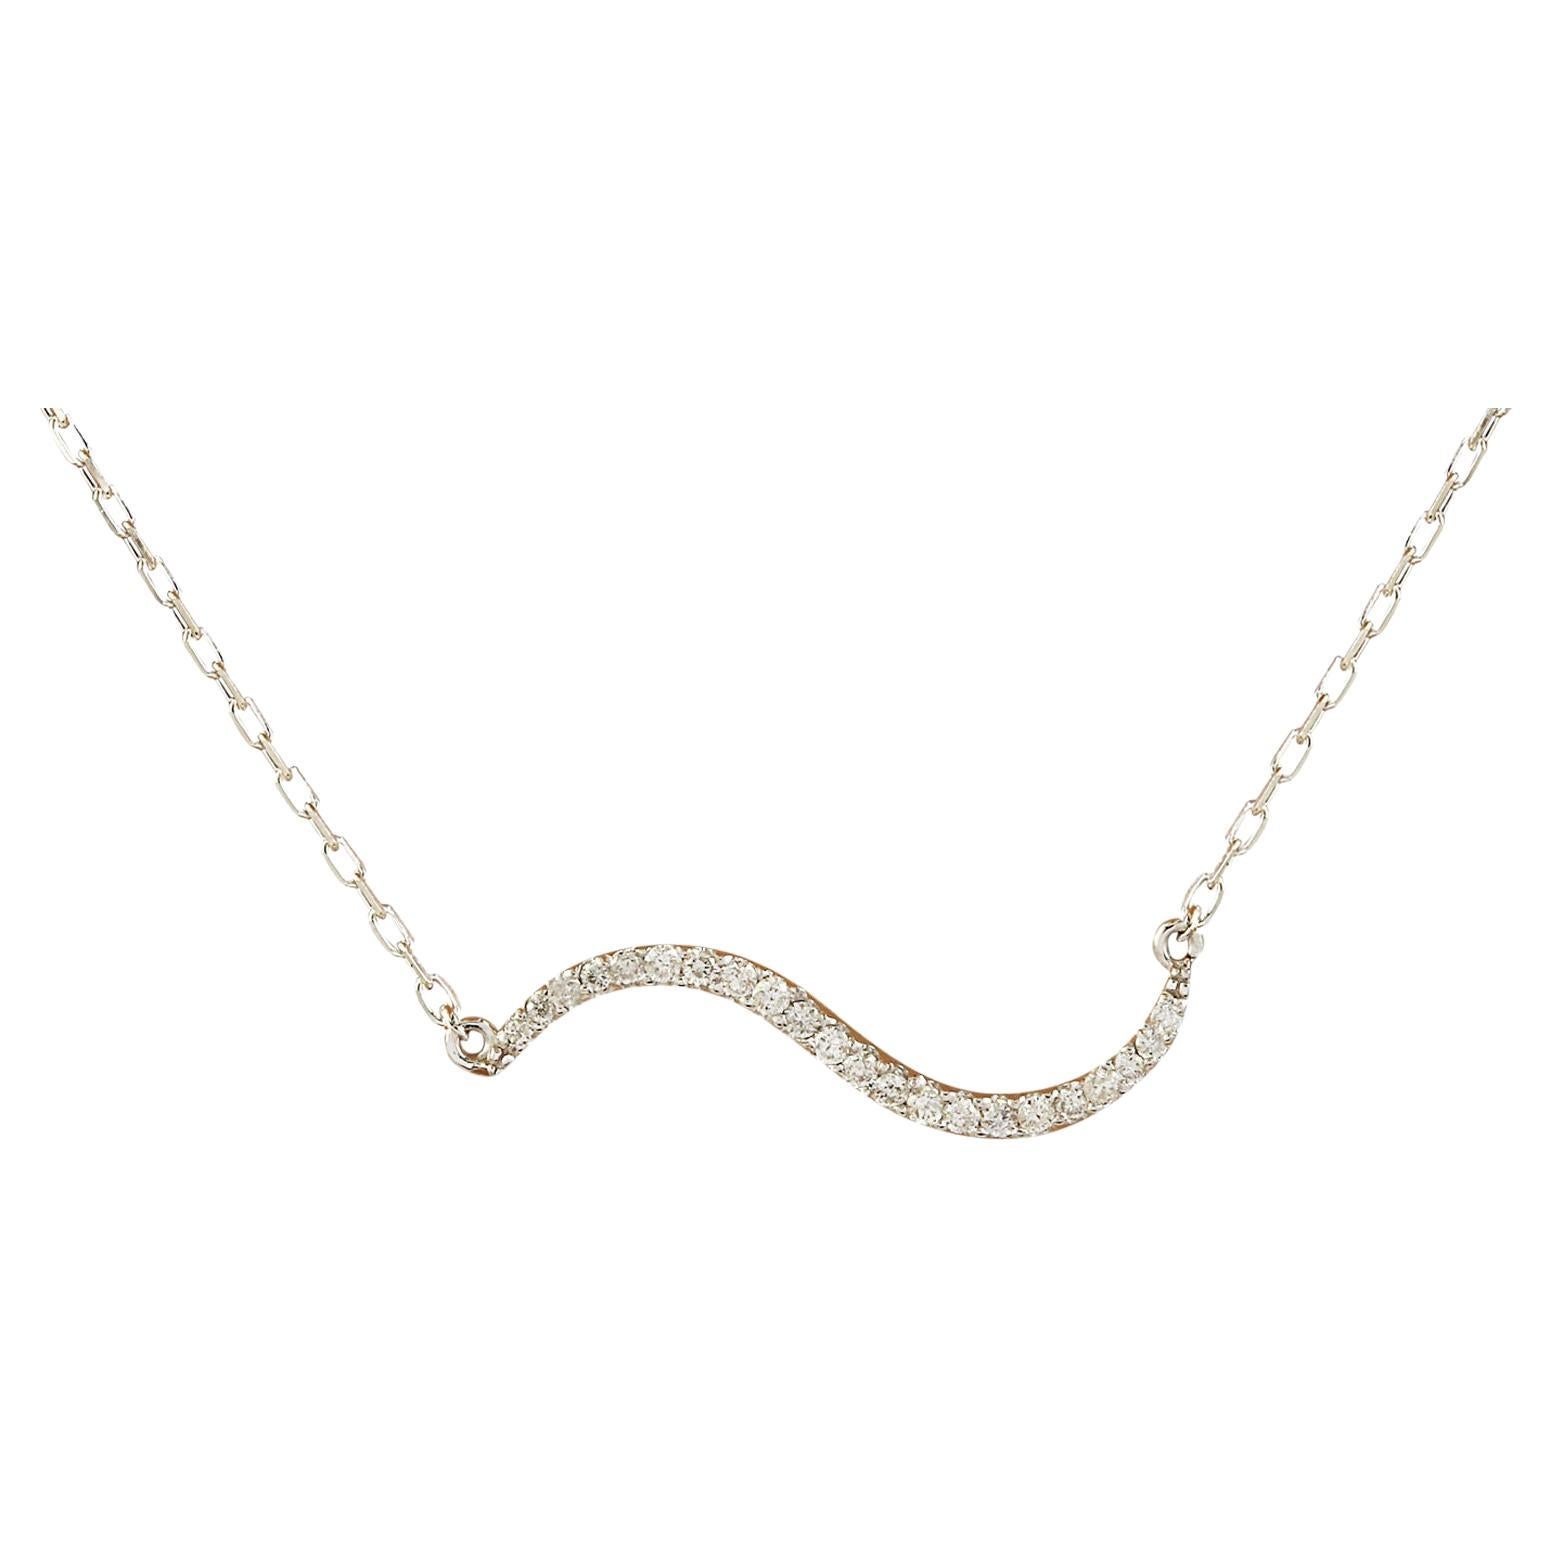 Exquisite Natural Diamond Necklace In 14 Karat White Gold 